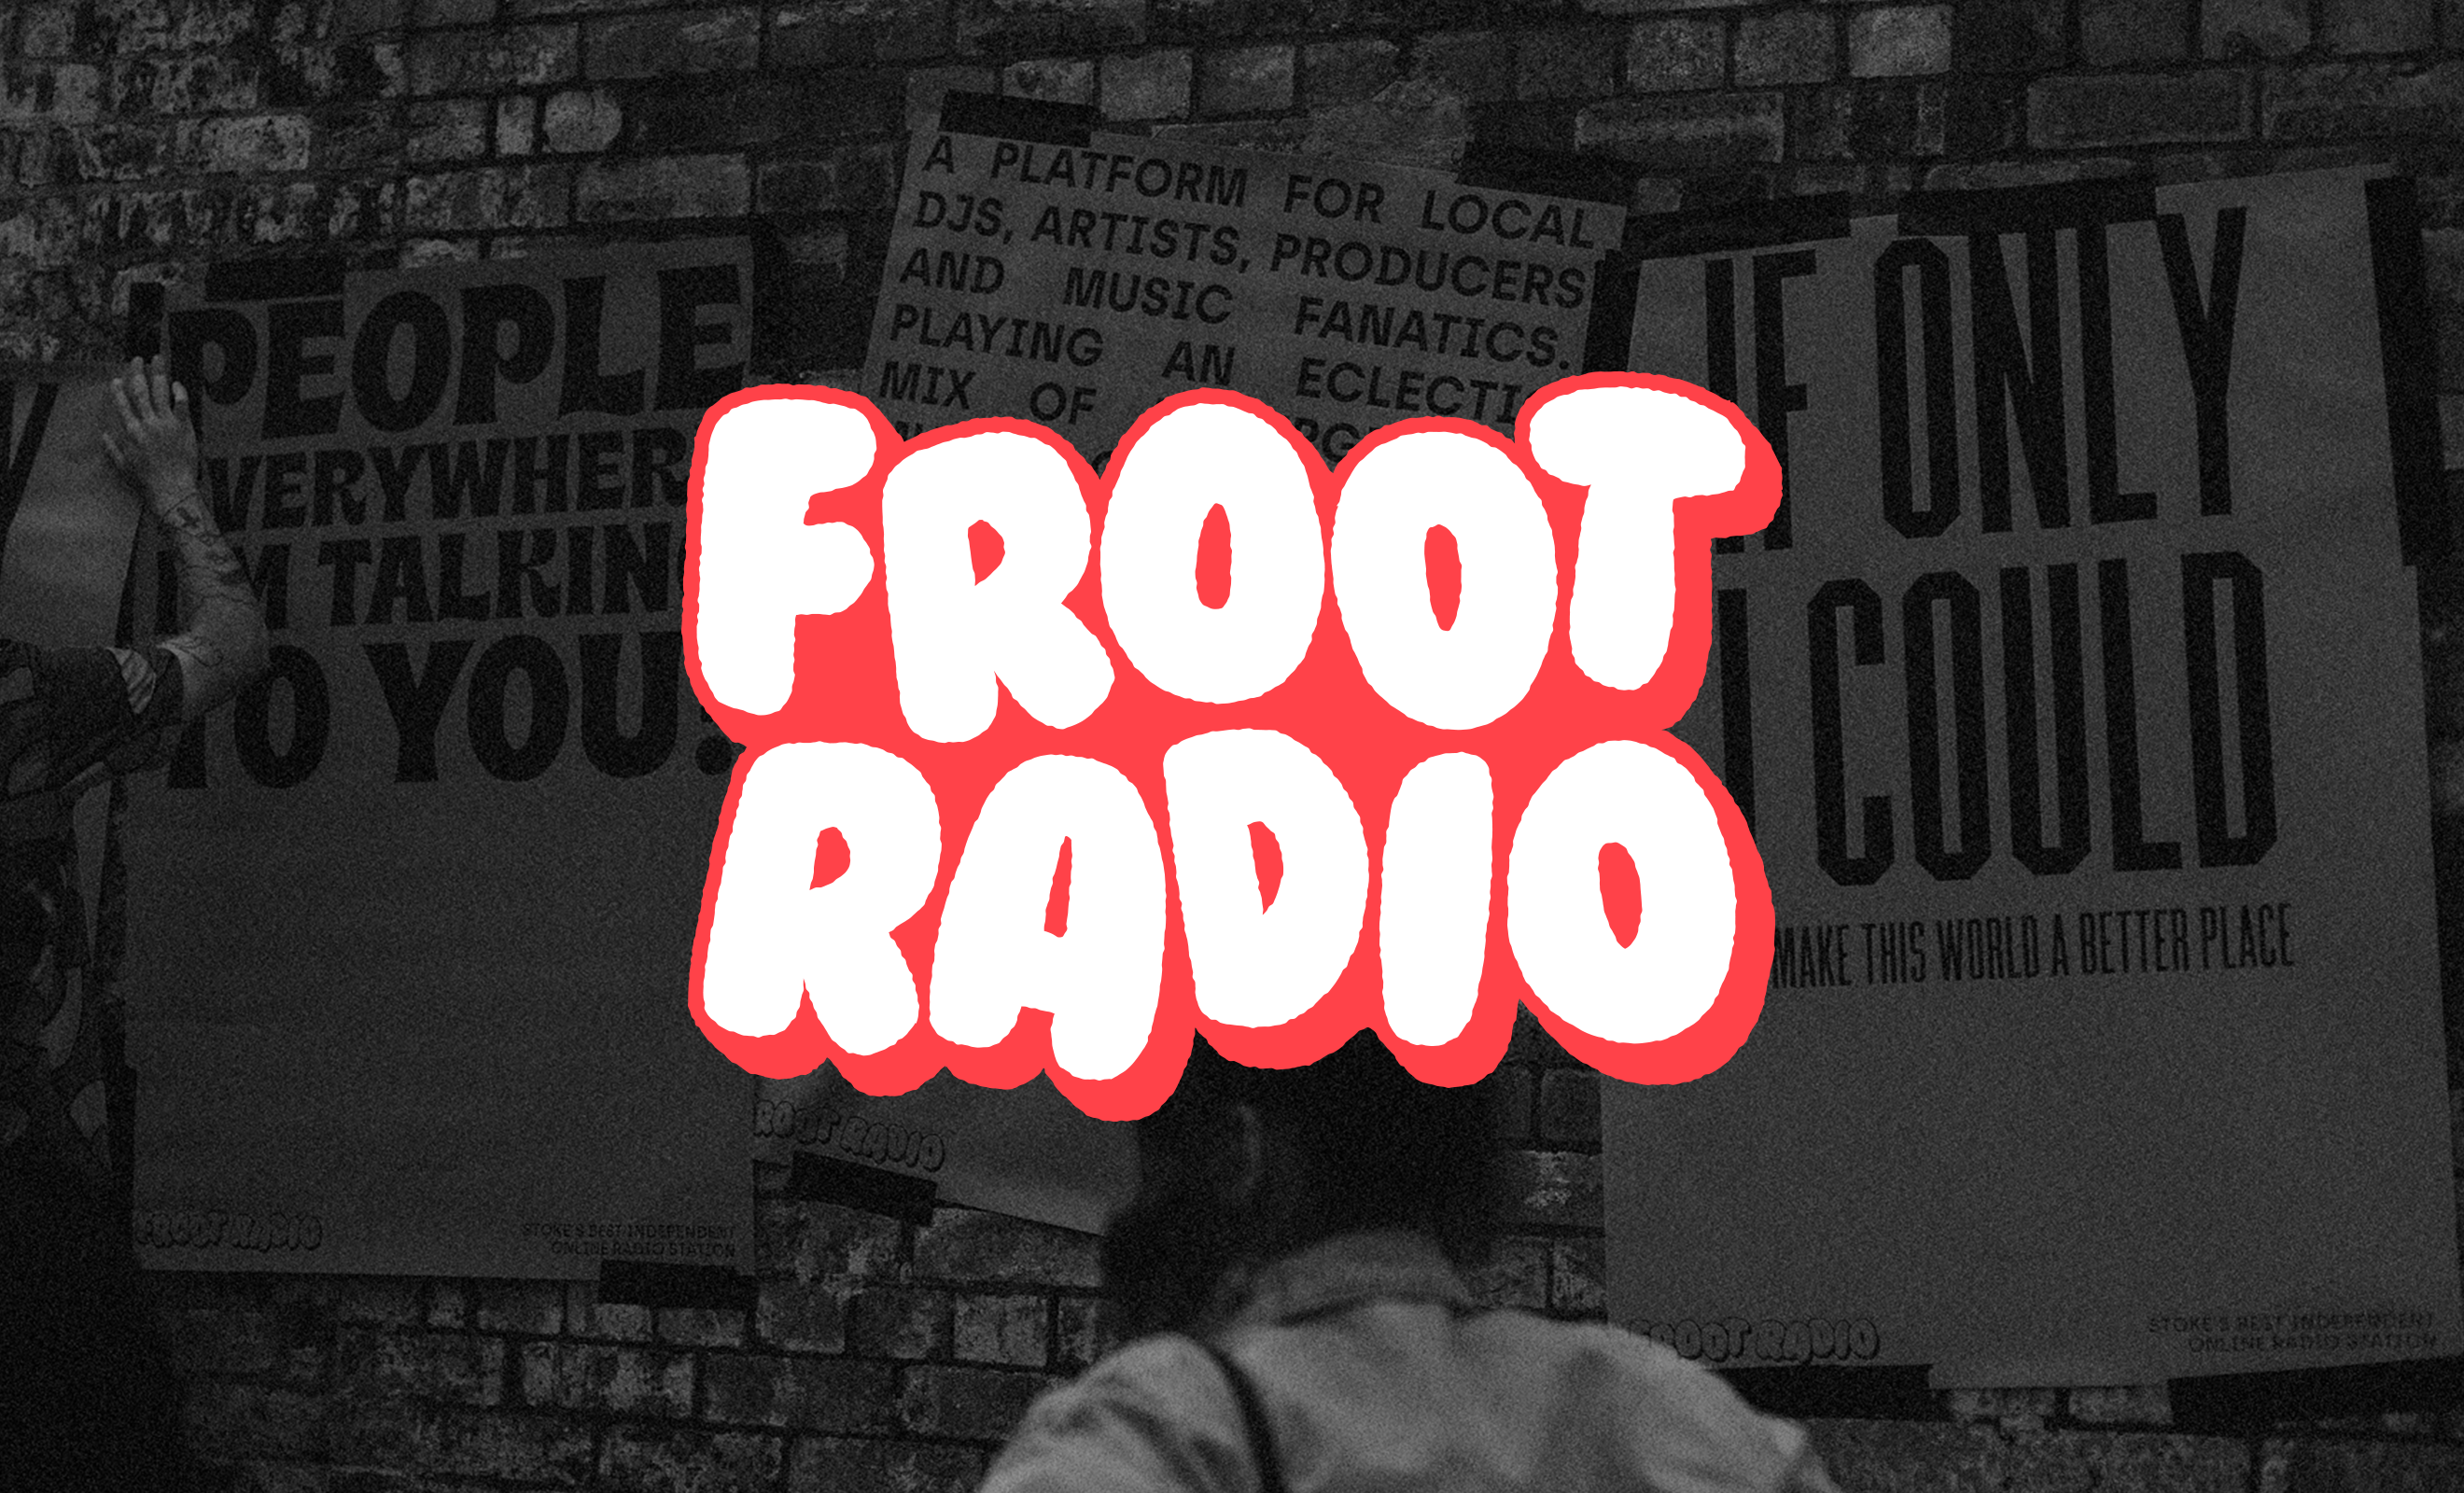 Froot Radio